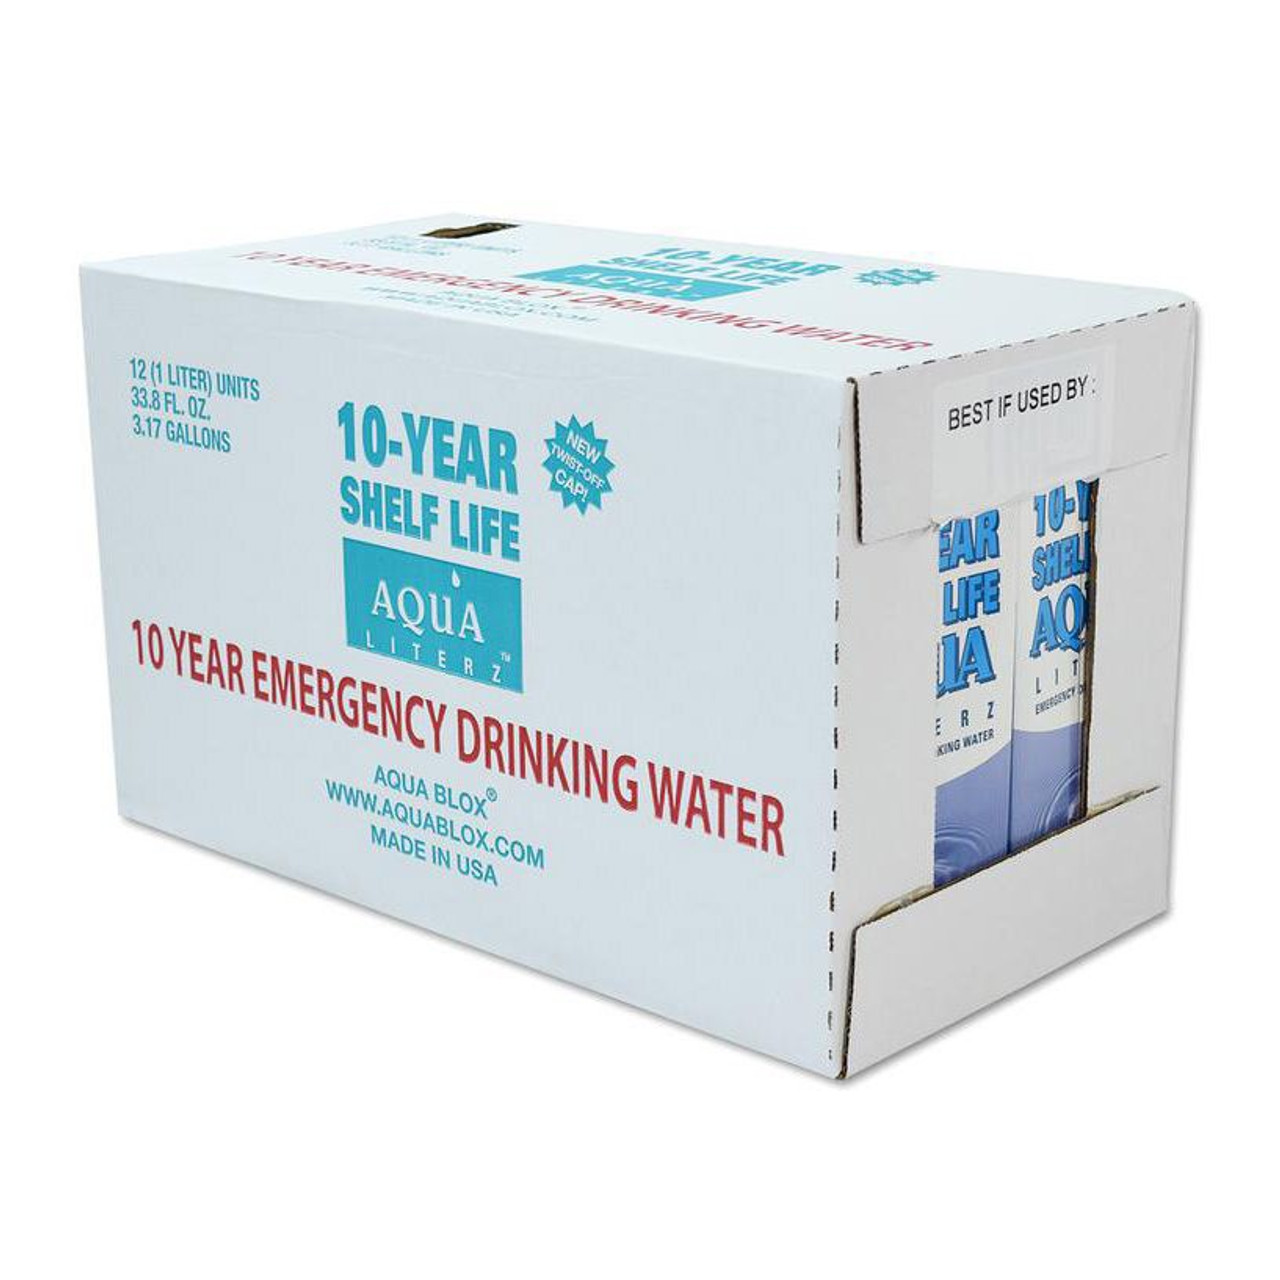 Blue Can Long Term Emergency Drinking Water - 50 Year Shelf Life